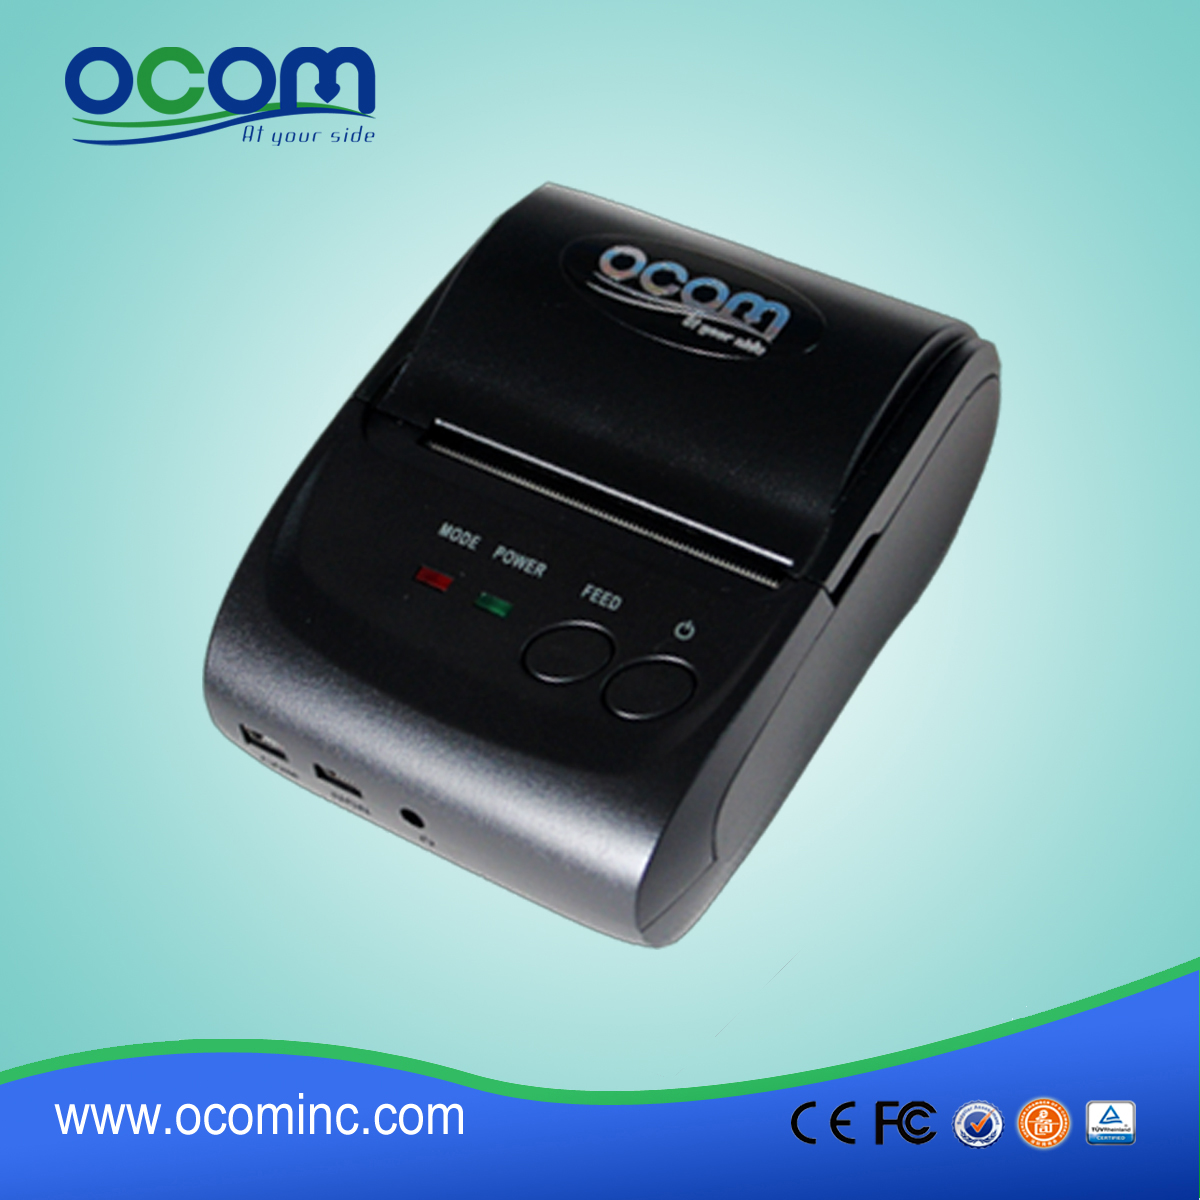 OCPP-M05: 2015 Мини Bluetooth принтер Android USB, портативный термопринтер